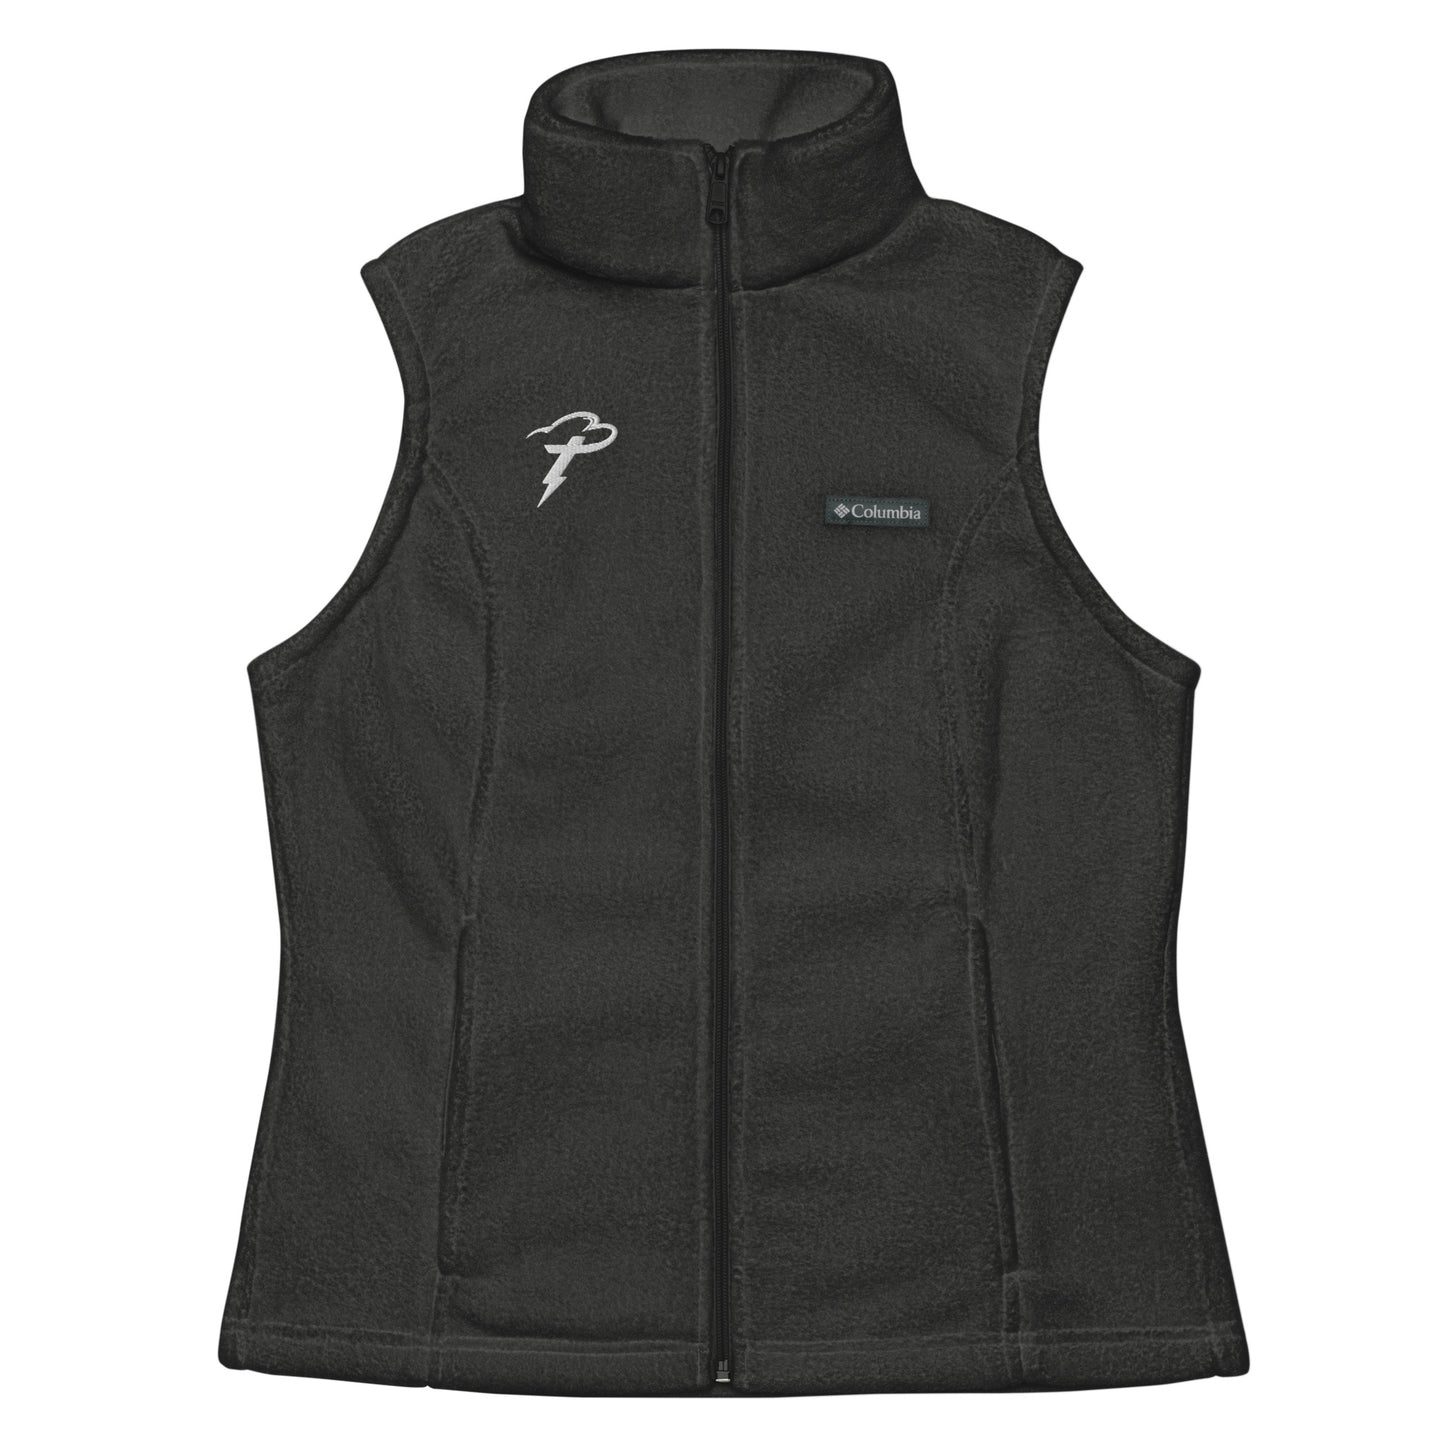 Thunder - Women’s Columbia fleece vest